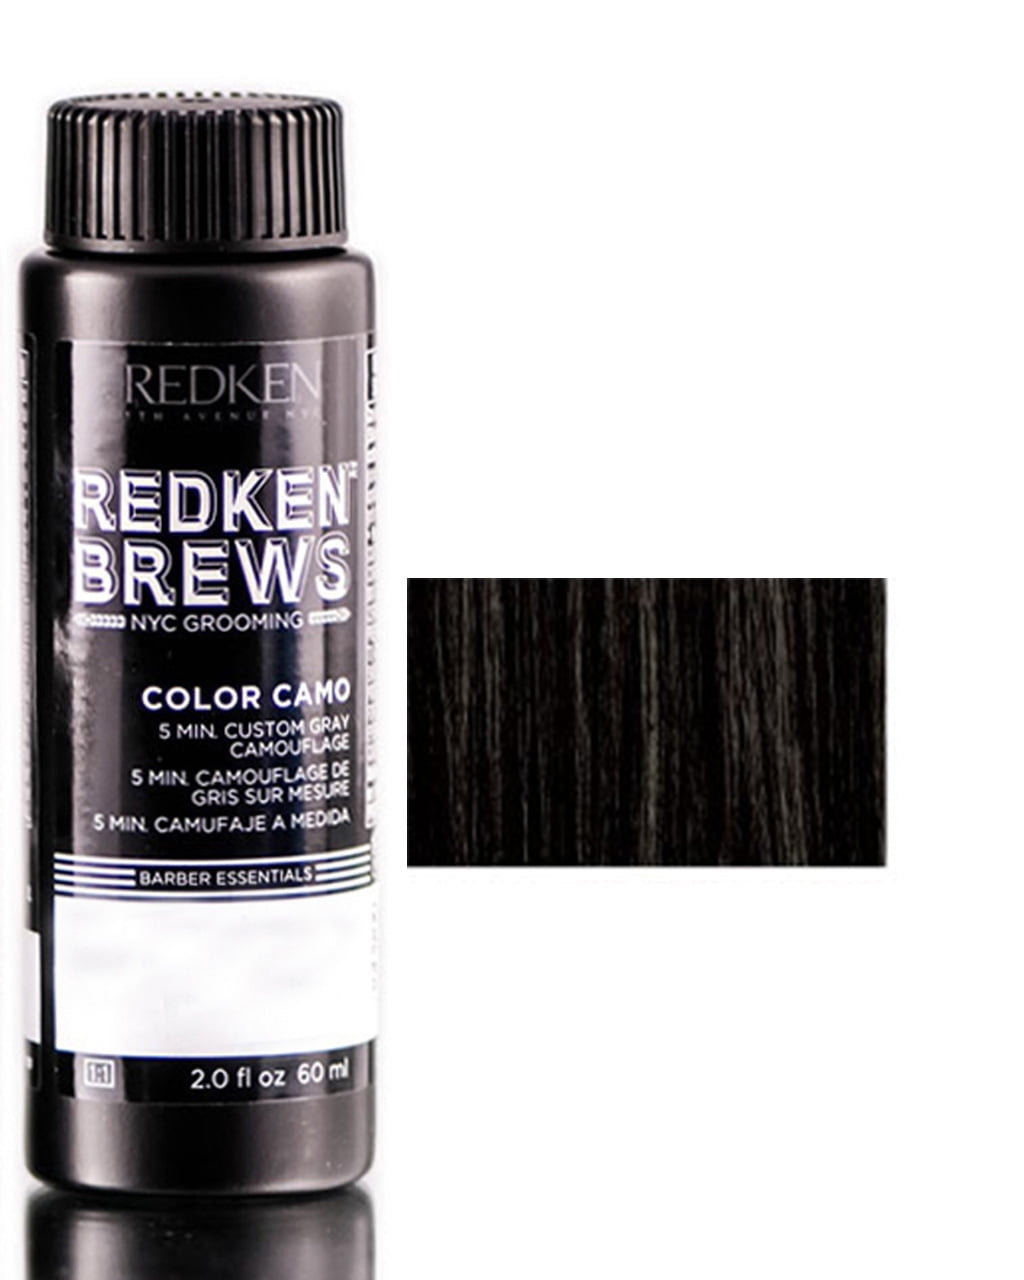 Redken Brews Color Camo - Black Ash - Pack of 1 with Sleek Comb -  Walmart.com